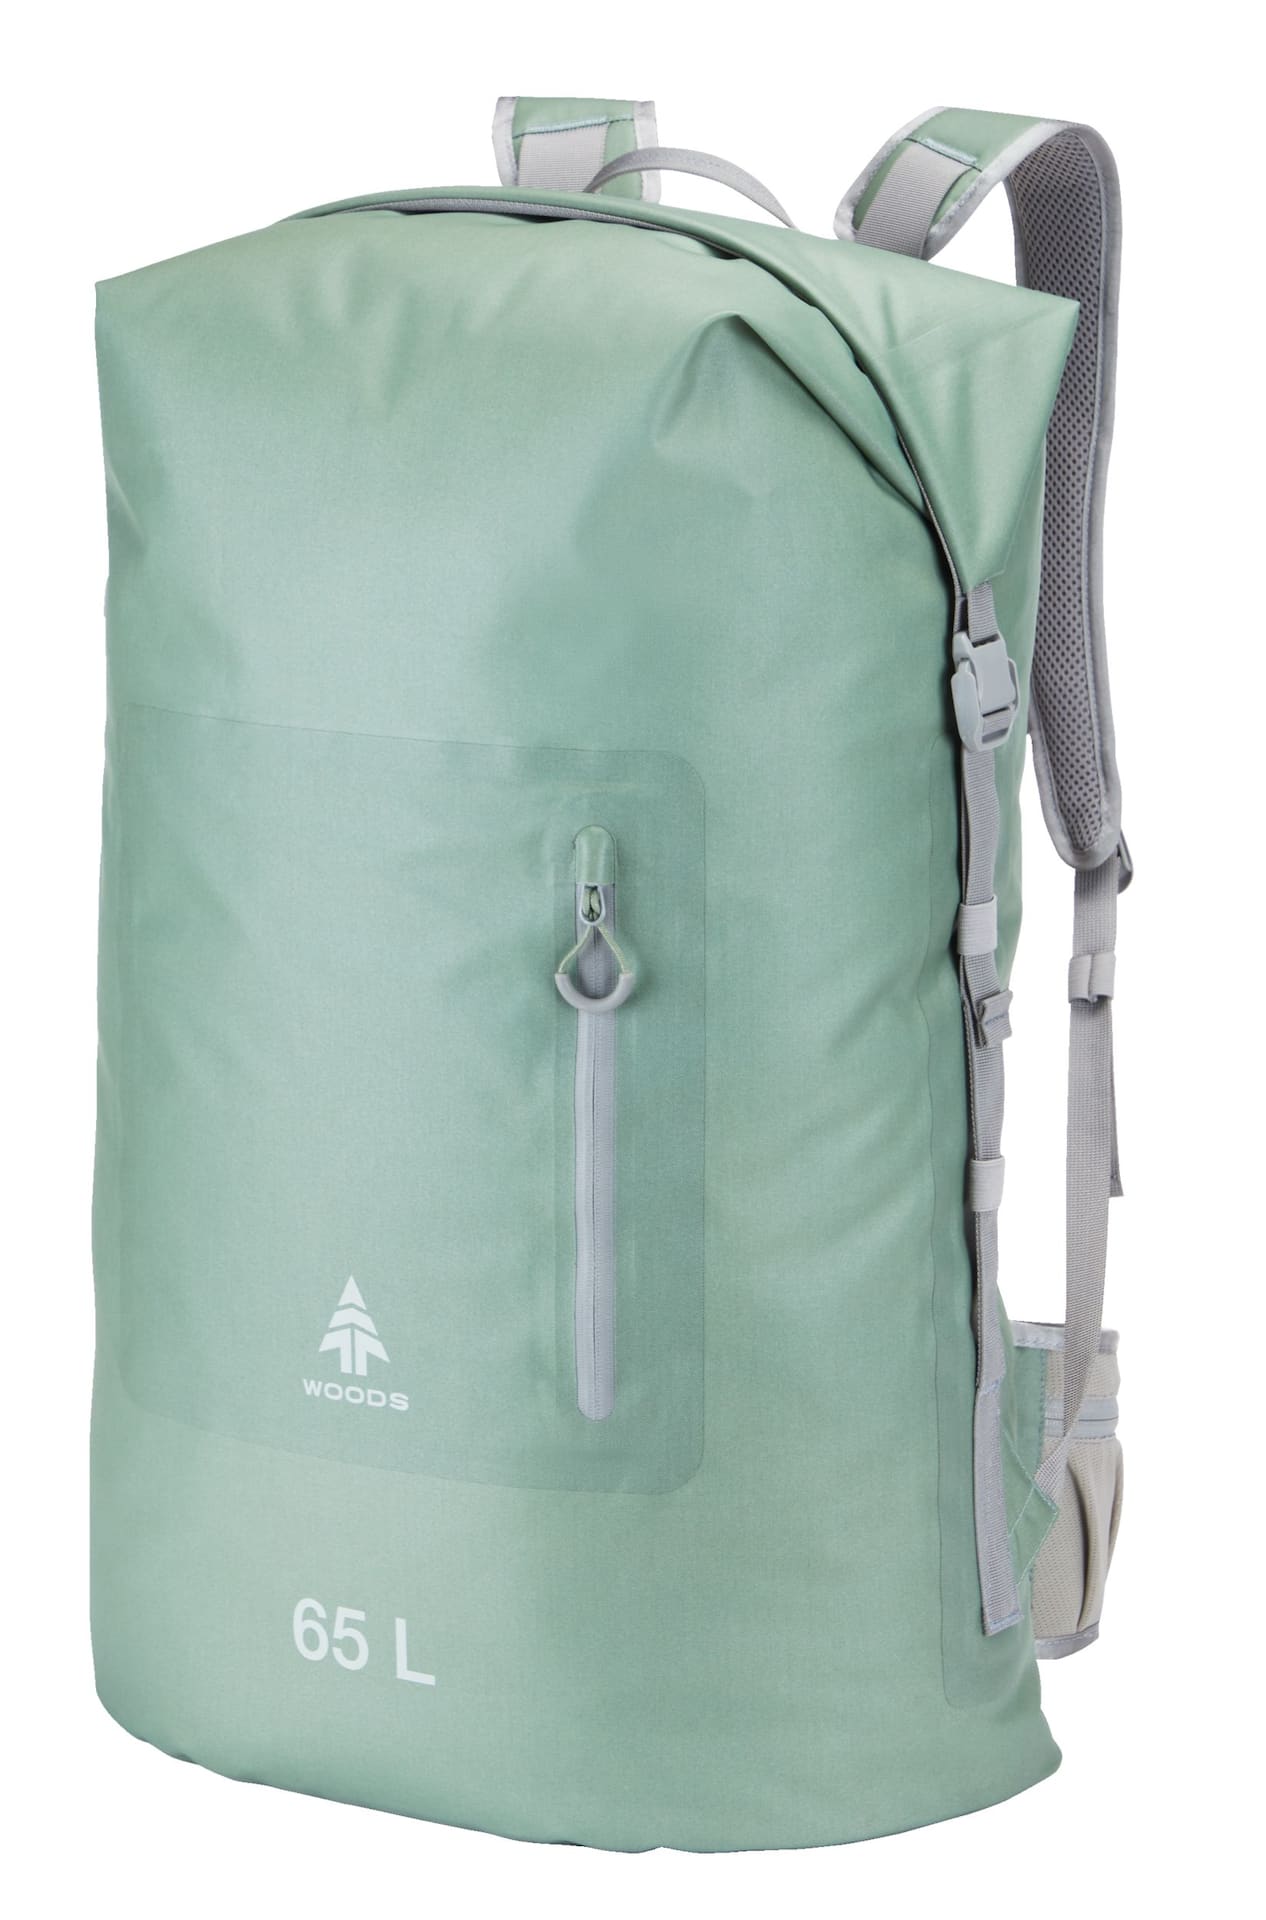 Yoga Bolster Pillow Bag Yoga Mat Bag Large Size with Pockets Rainproof  Environmental Friendly Yoga Strap Bag for Women